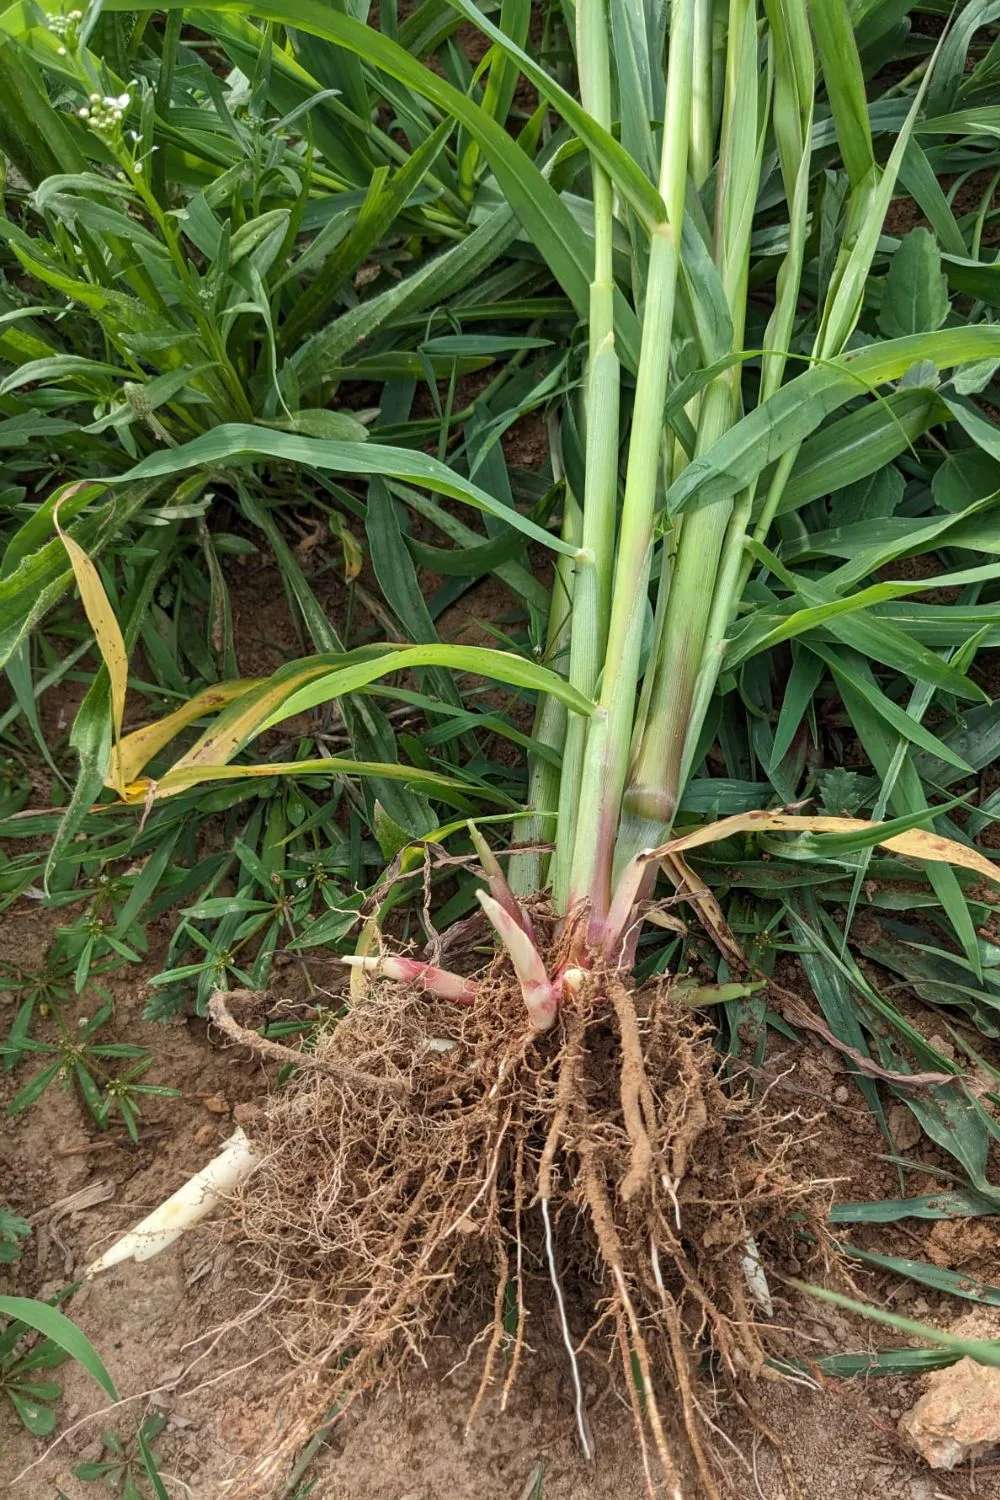 Johnsongrass roots and rhizomes. 